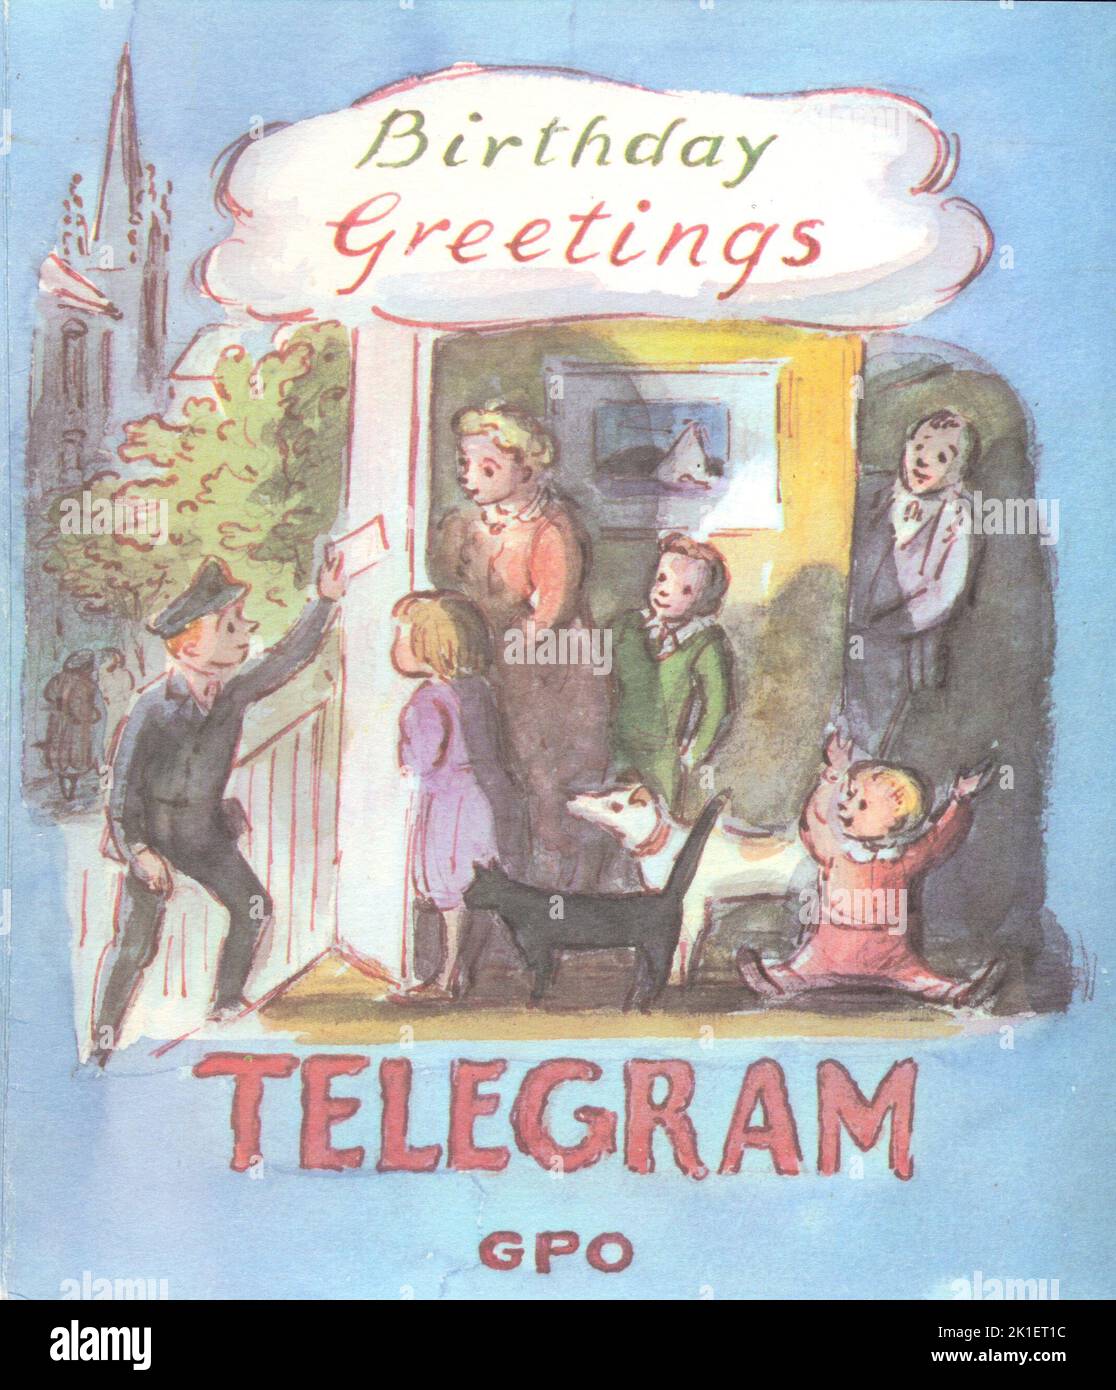 Decorative envelope for birthday greetings telegram designed by Edward Ardizzone 1962 Stock Photo